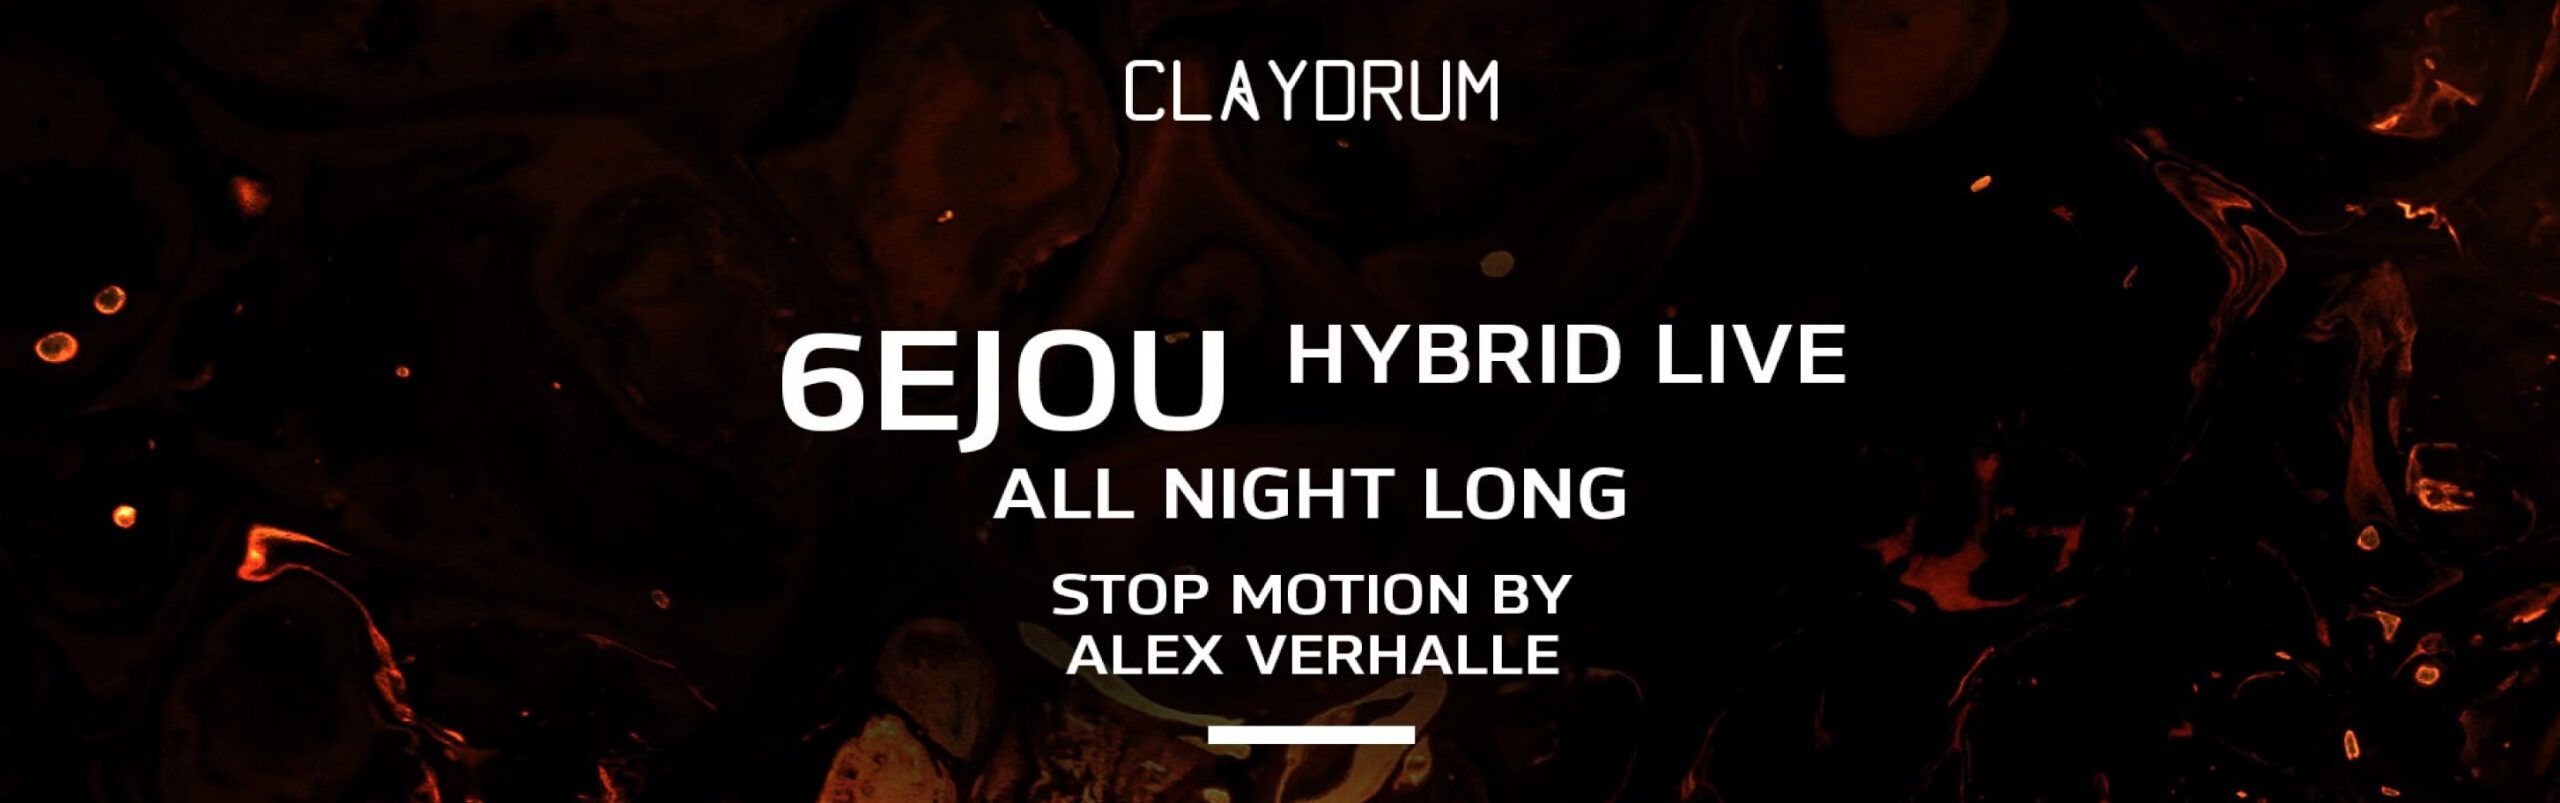 Claydrum presents 6ejou Hybrid Live header